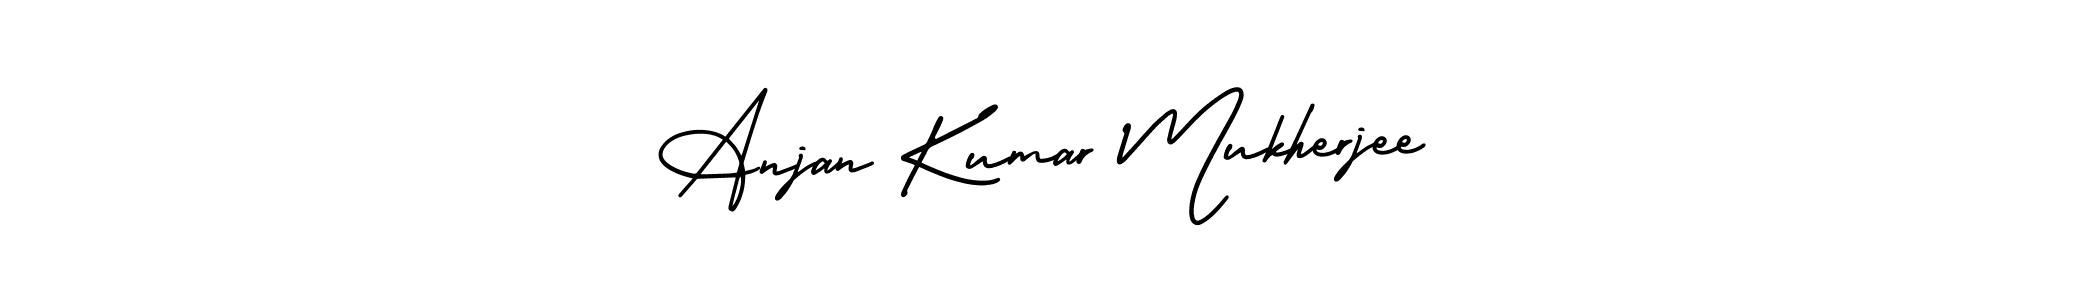 Best and Professional Signature Style for Anjan Kumar Mukherjee. AmerikaSignatureDemo-Regular Best Signature Style Collection. Anjan Kumar Mukherjee signature style 3 images and pictures png